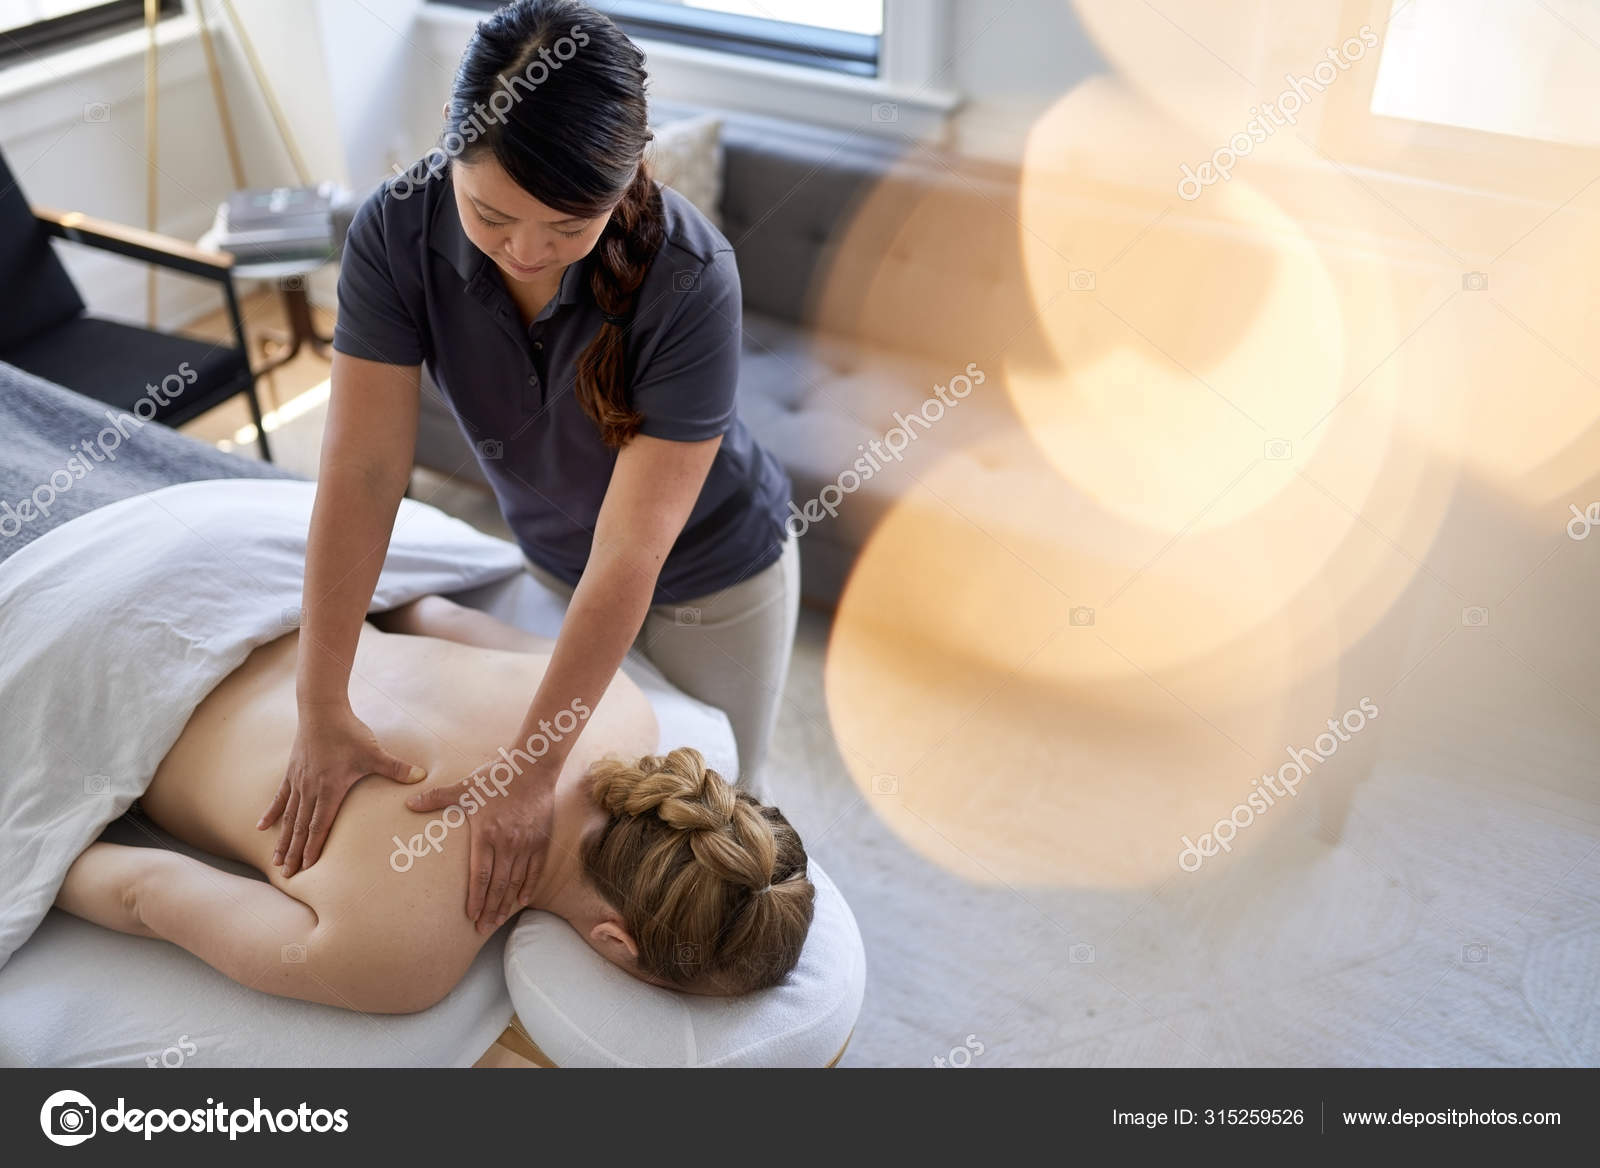 man giving woman massage